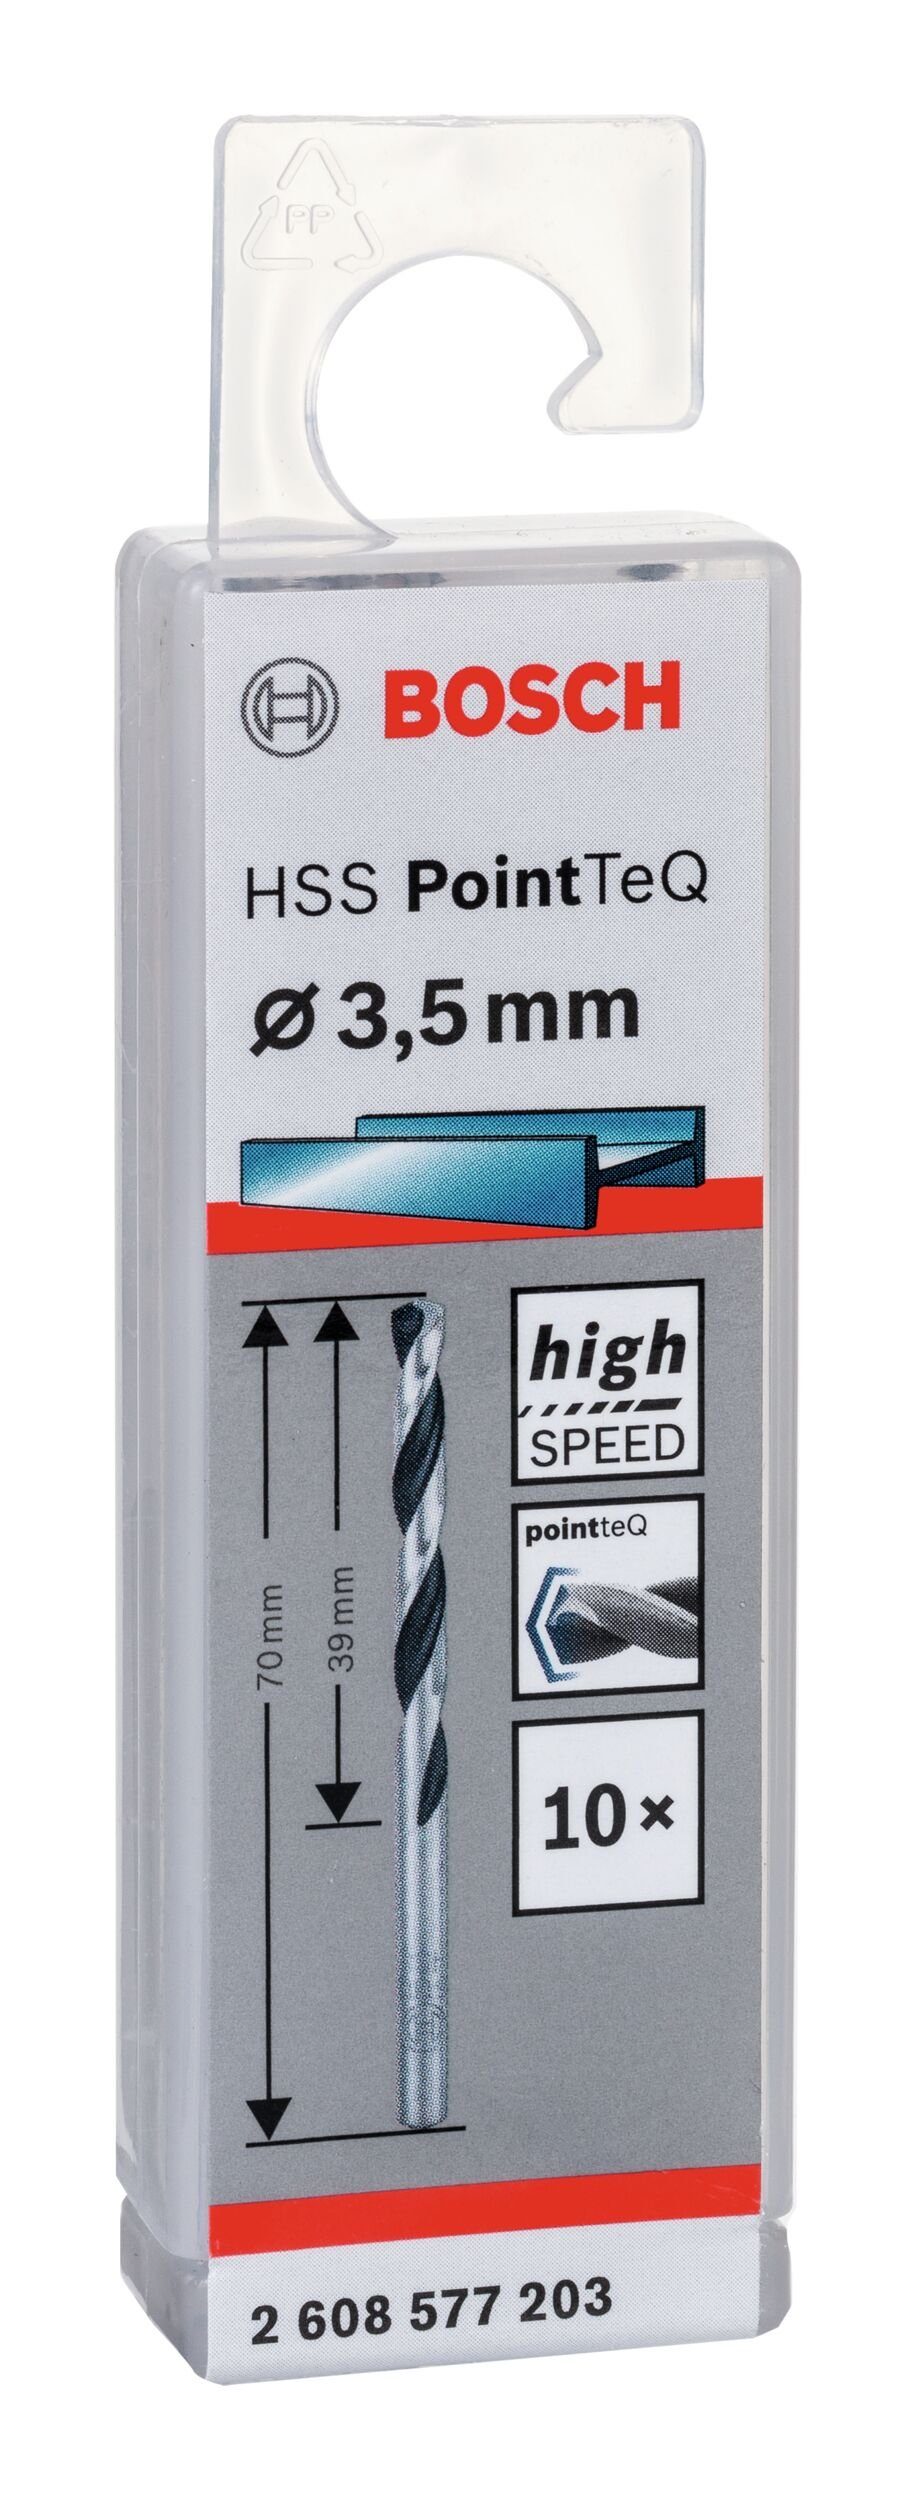 PointTeQ (DIN 3,5 mm 10er-Pack - - HSS BOSCH Metallspiralbohrer Metallbohrer, 338) Stück), (10